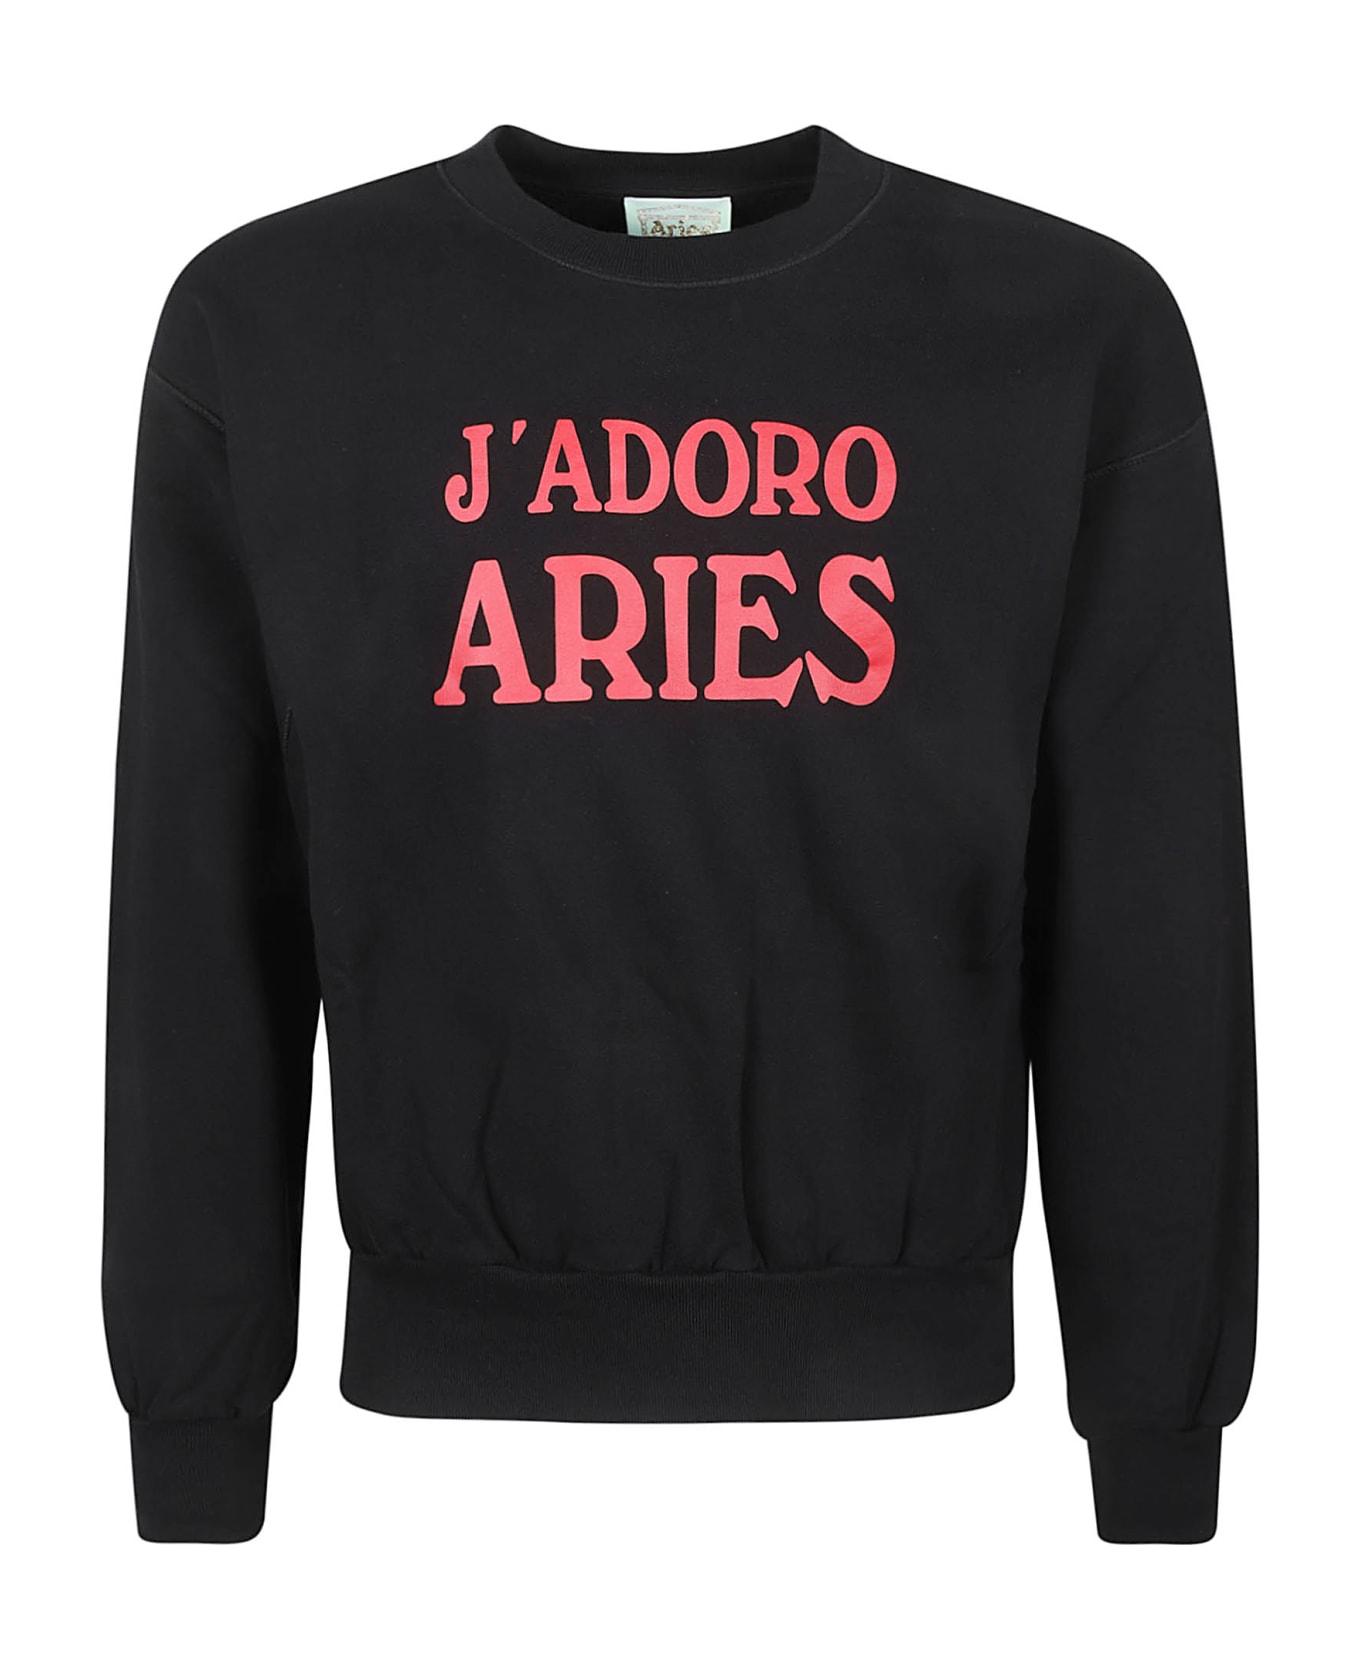 Aries J'adoro Aries Sweatshirt - Black